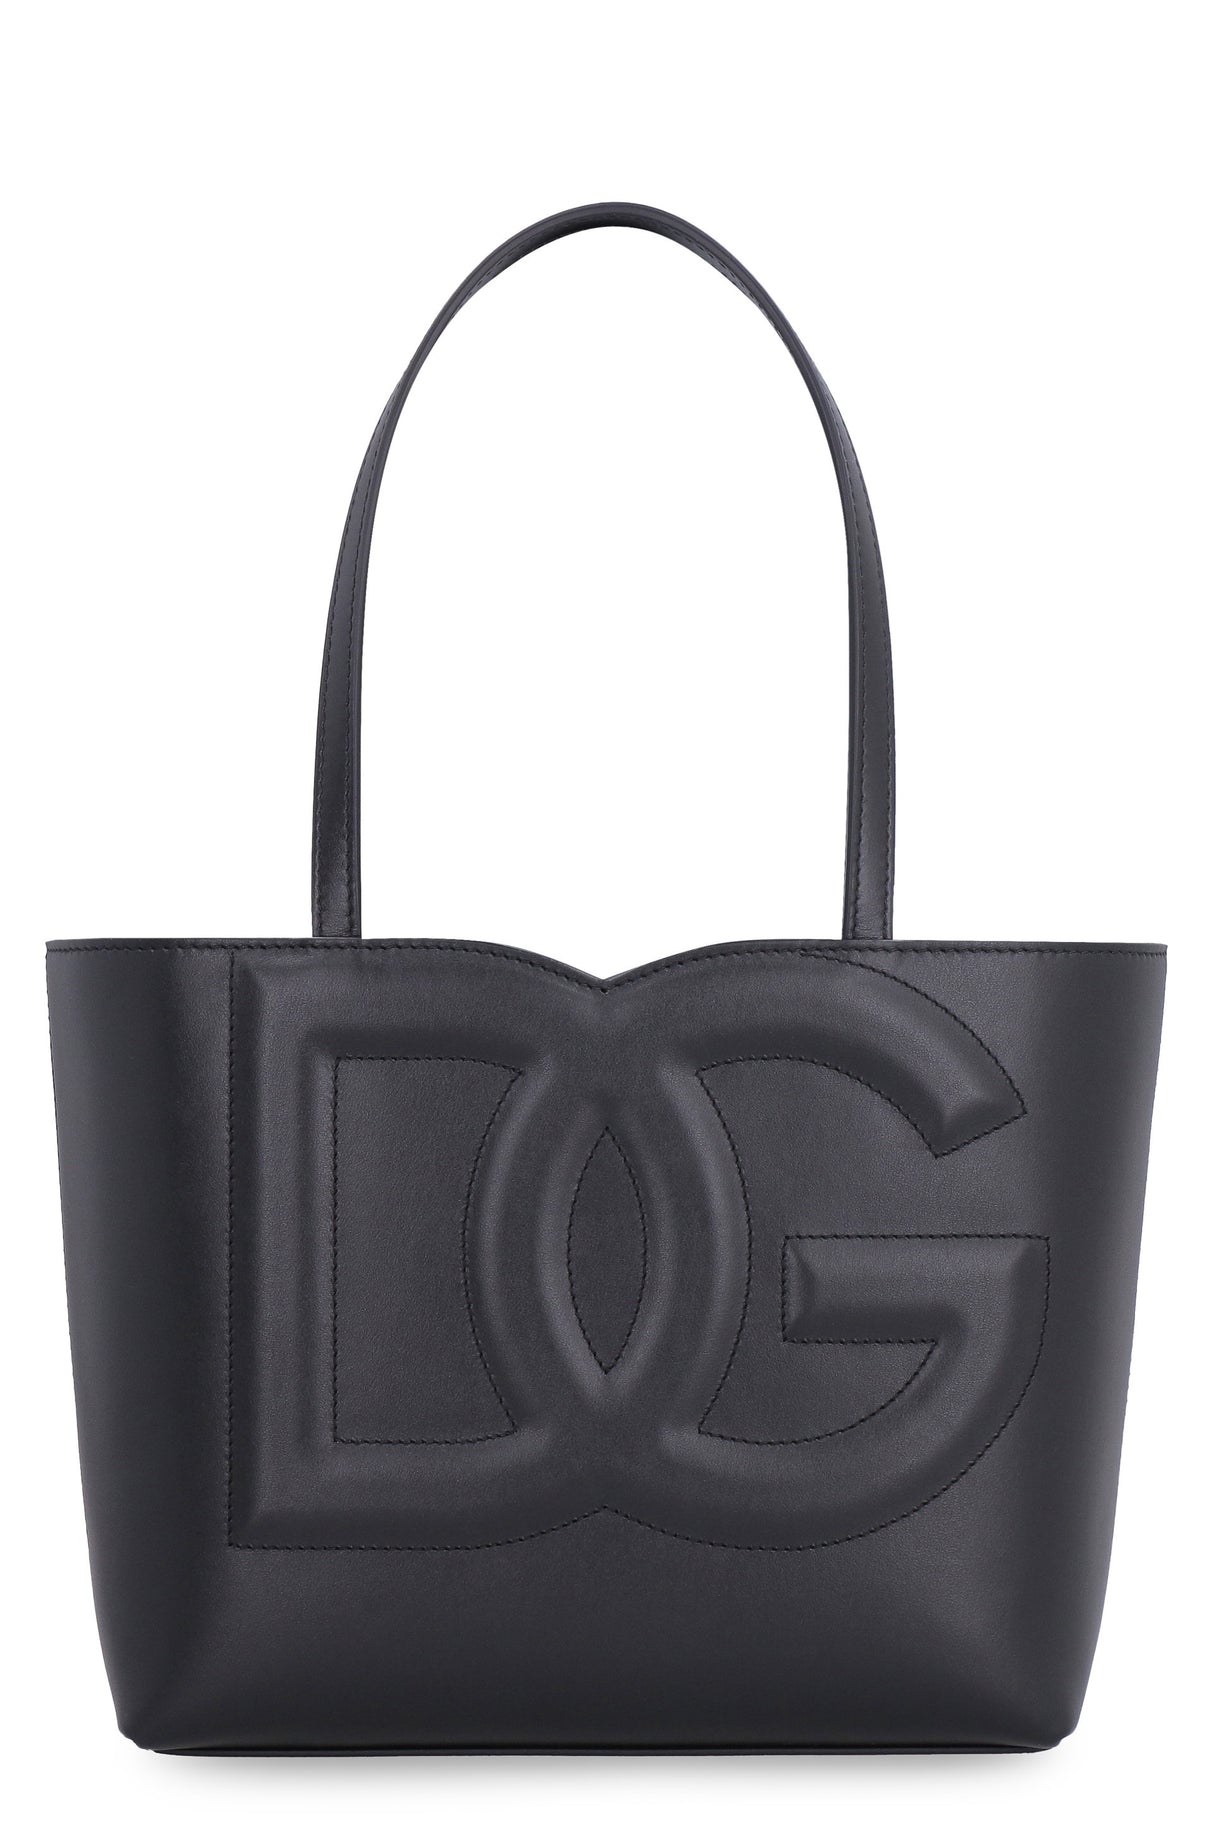 DOLCE & GABBANA DG LOGO SMALL Tote Handbag Handbag